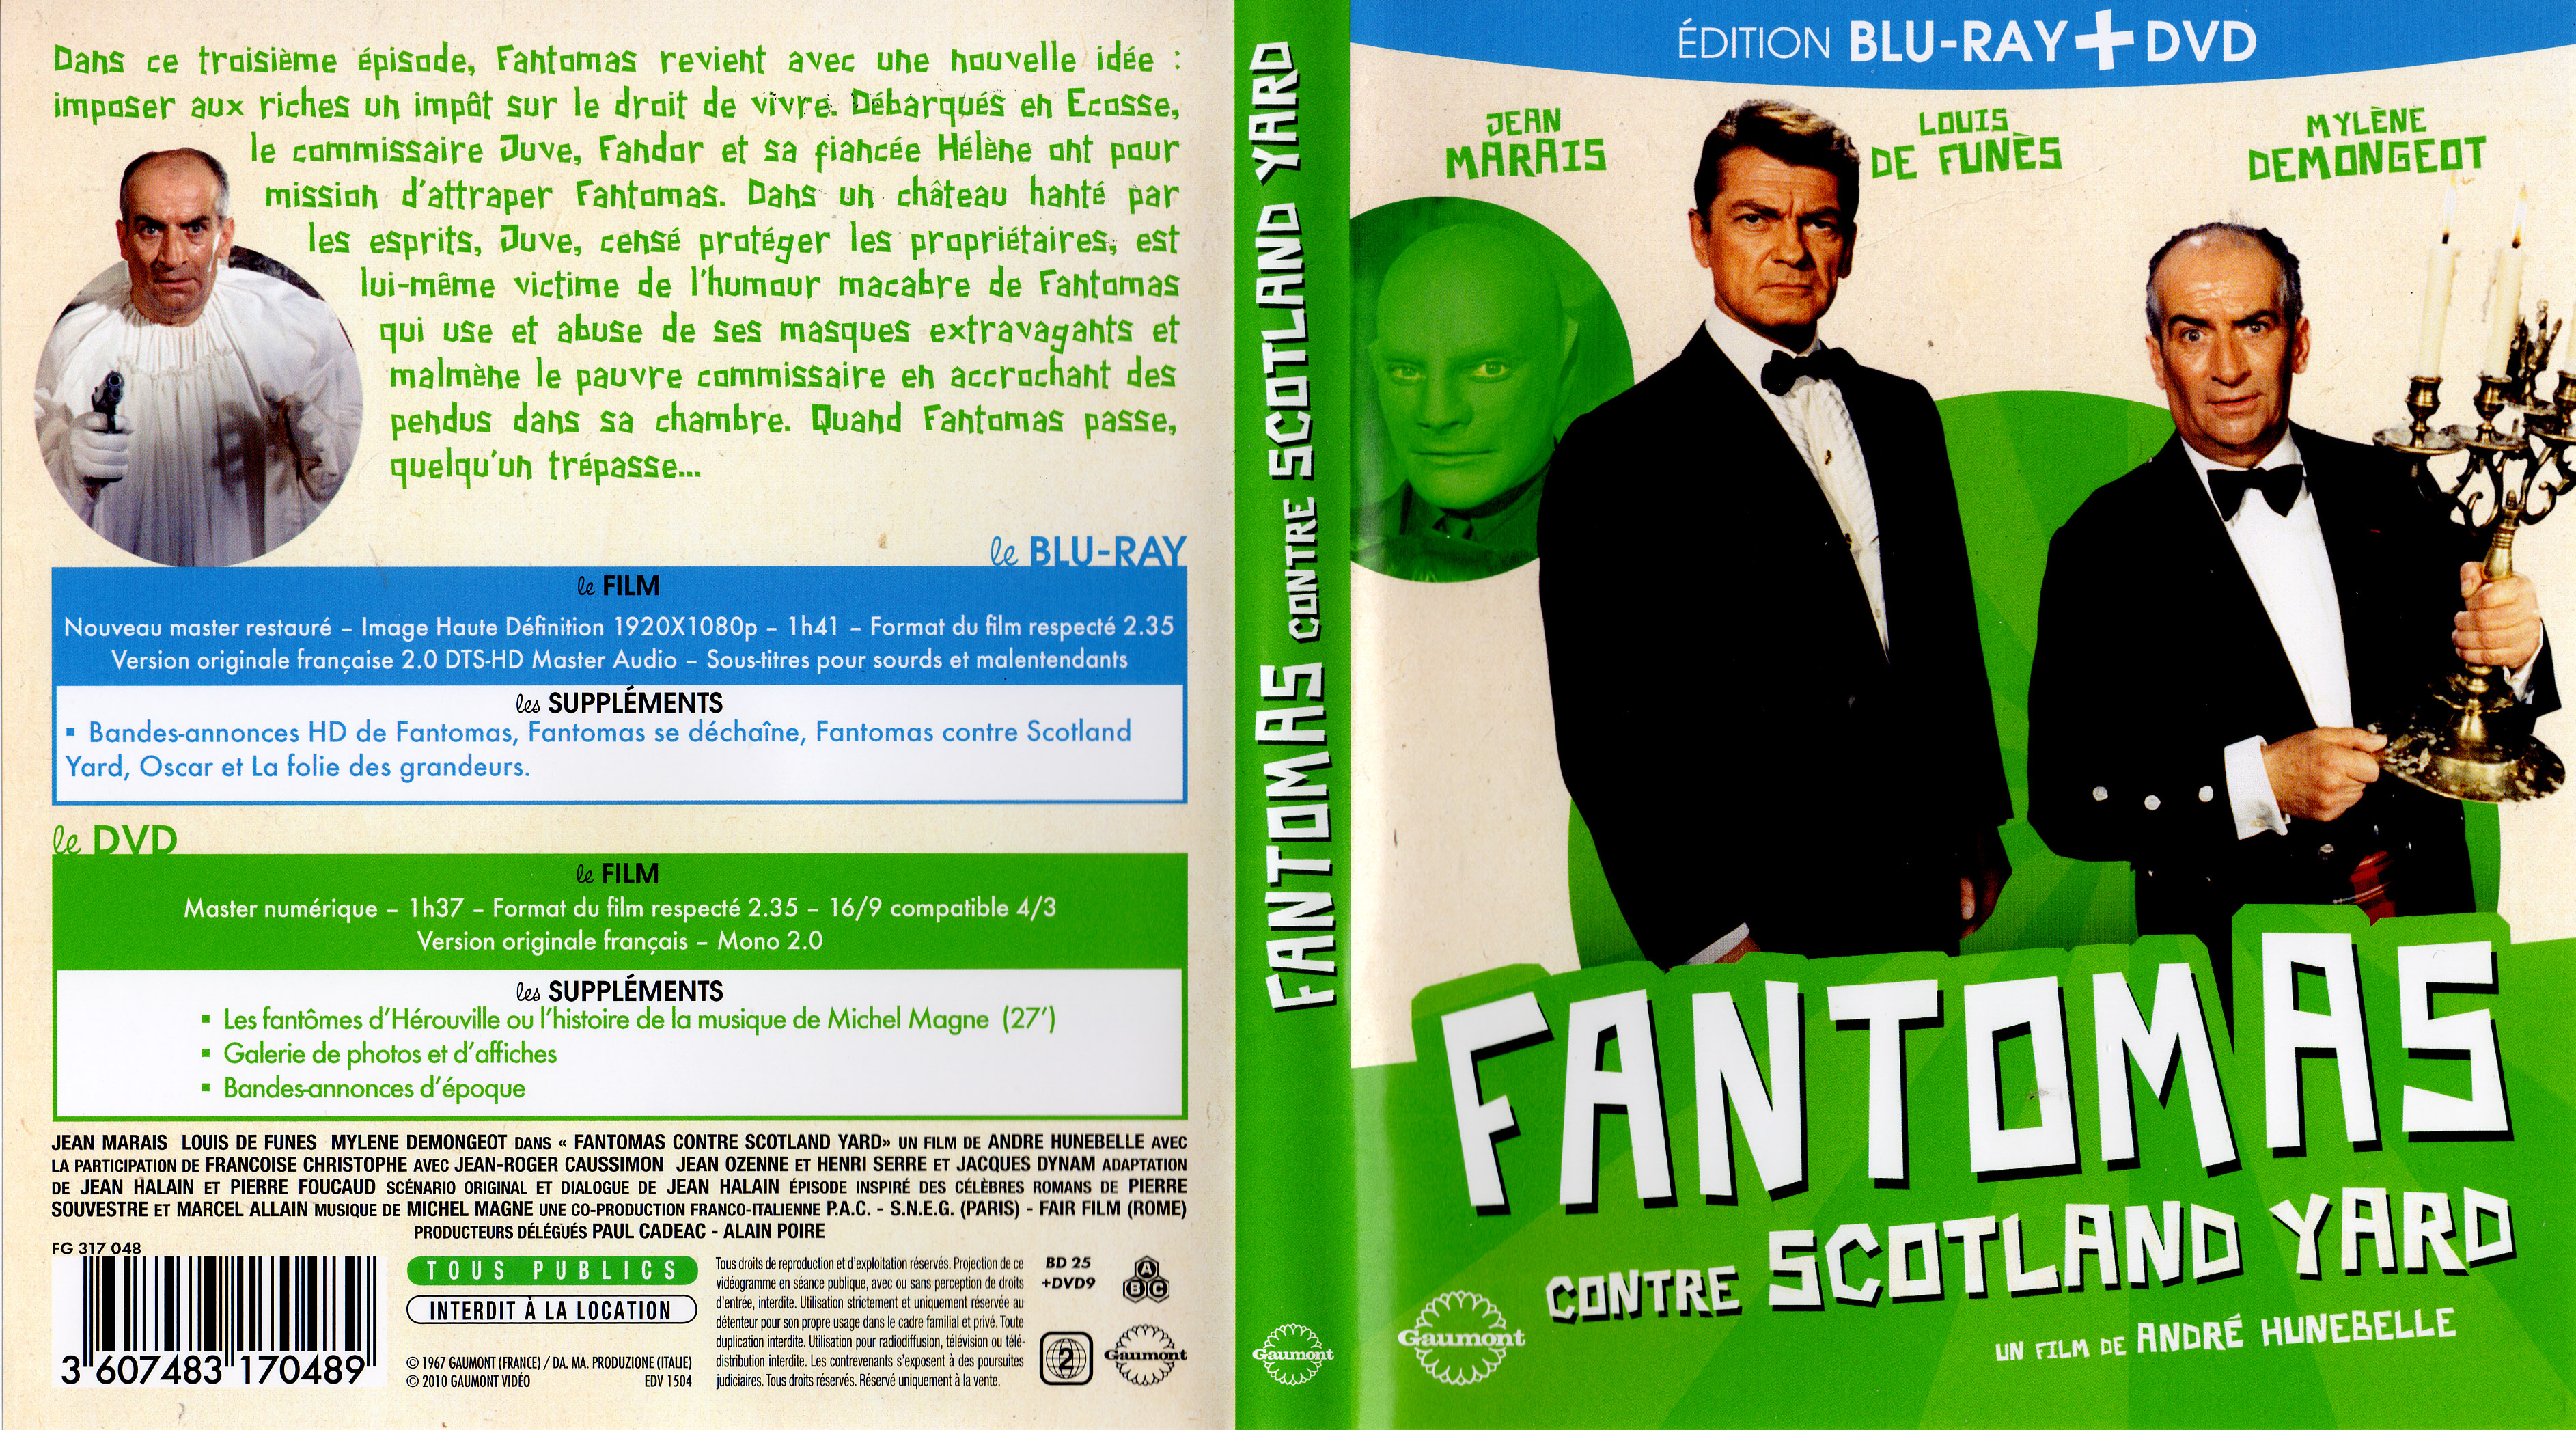 Jaquette DVD Fantomas contre Scotland Yard (BLU-RAY)